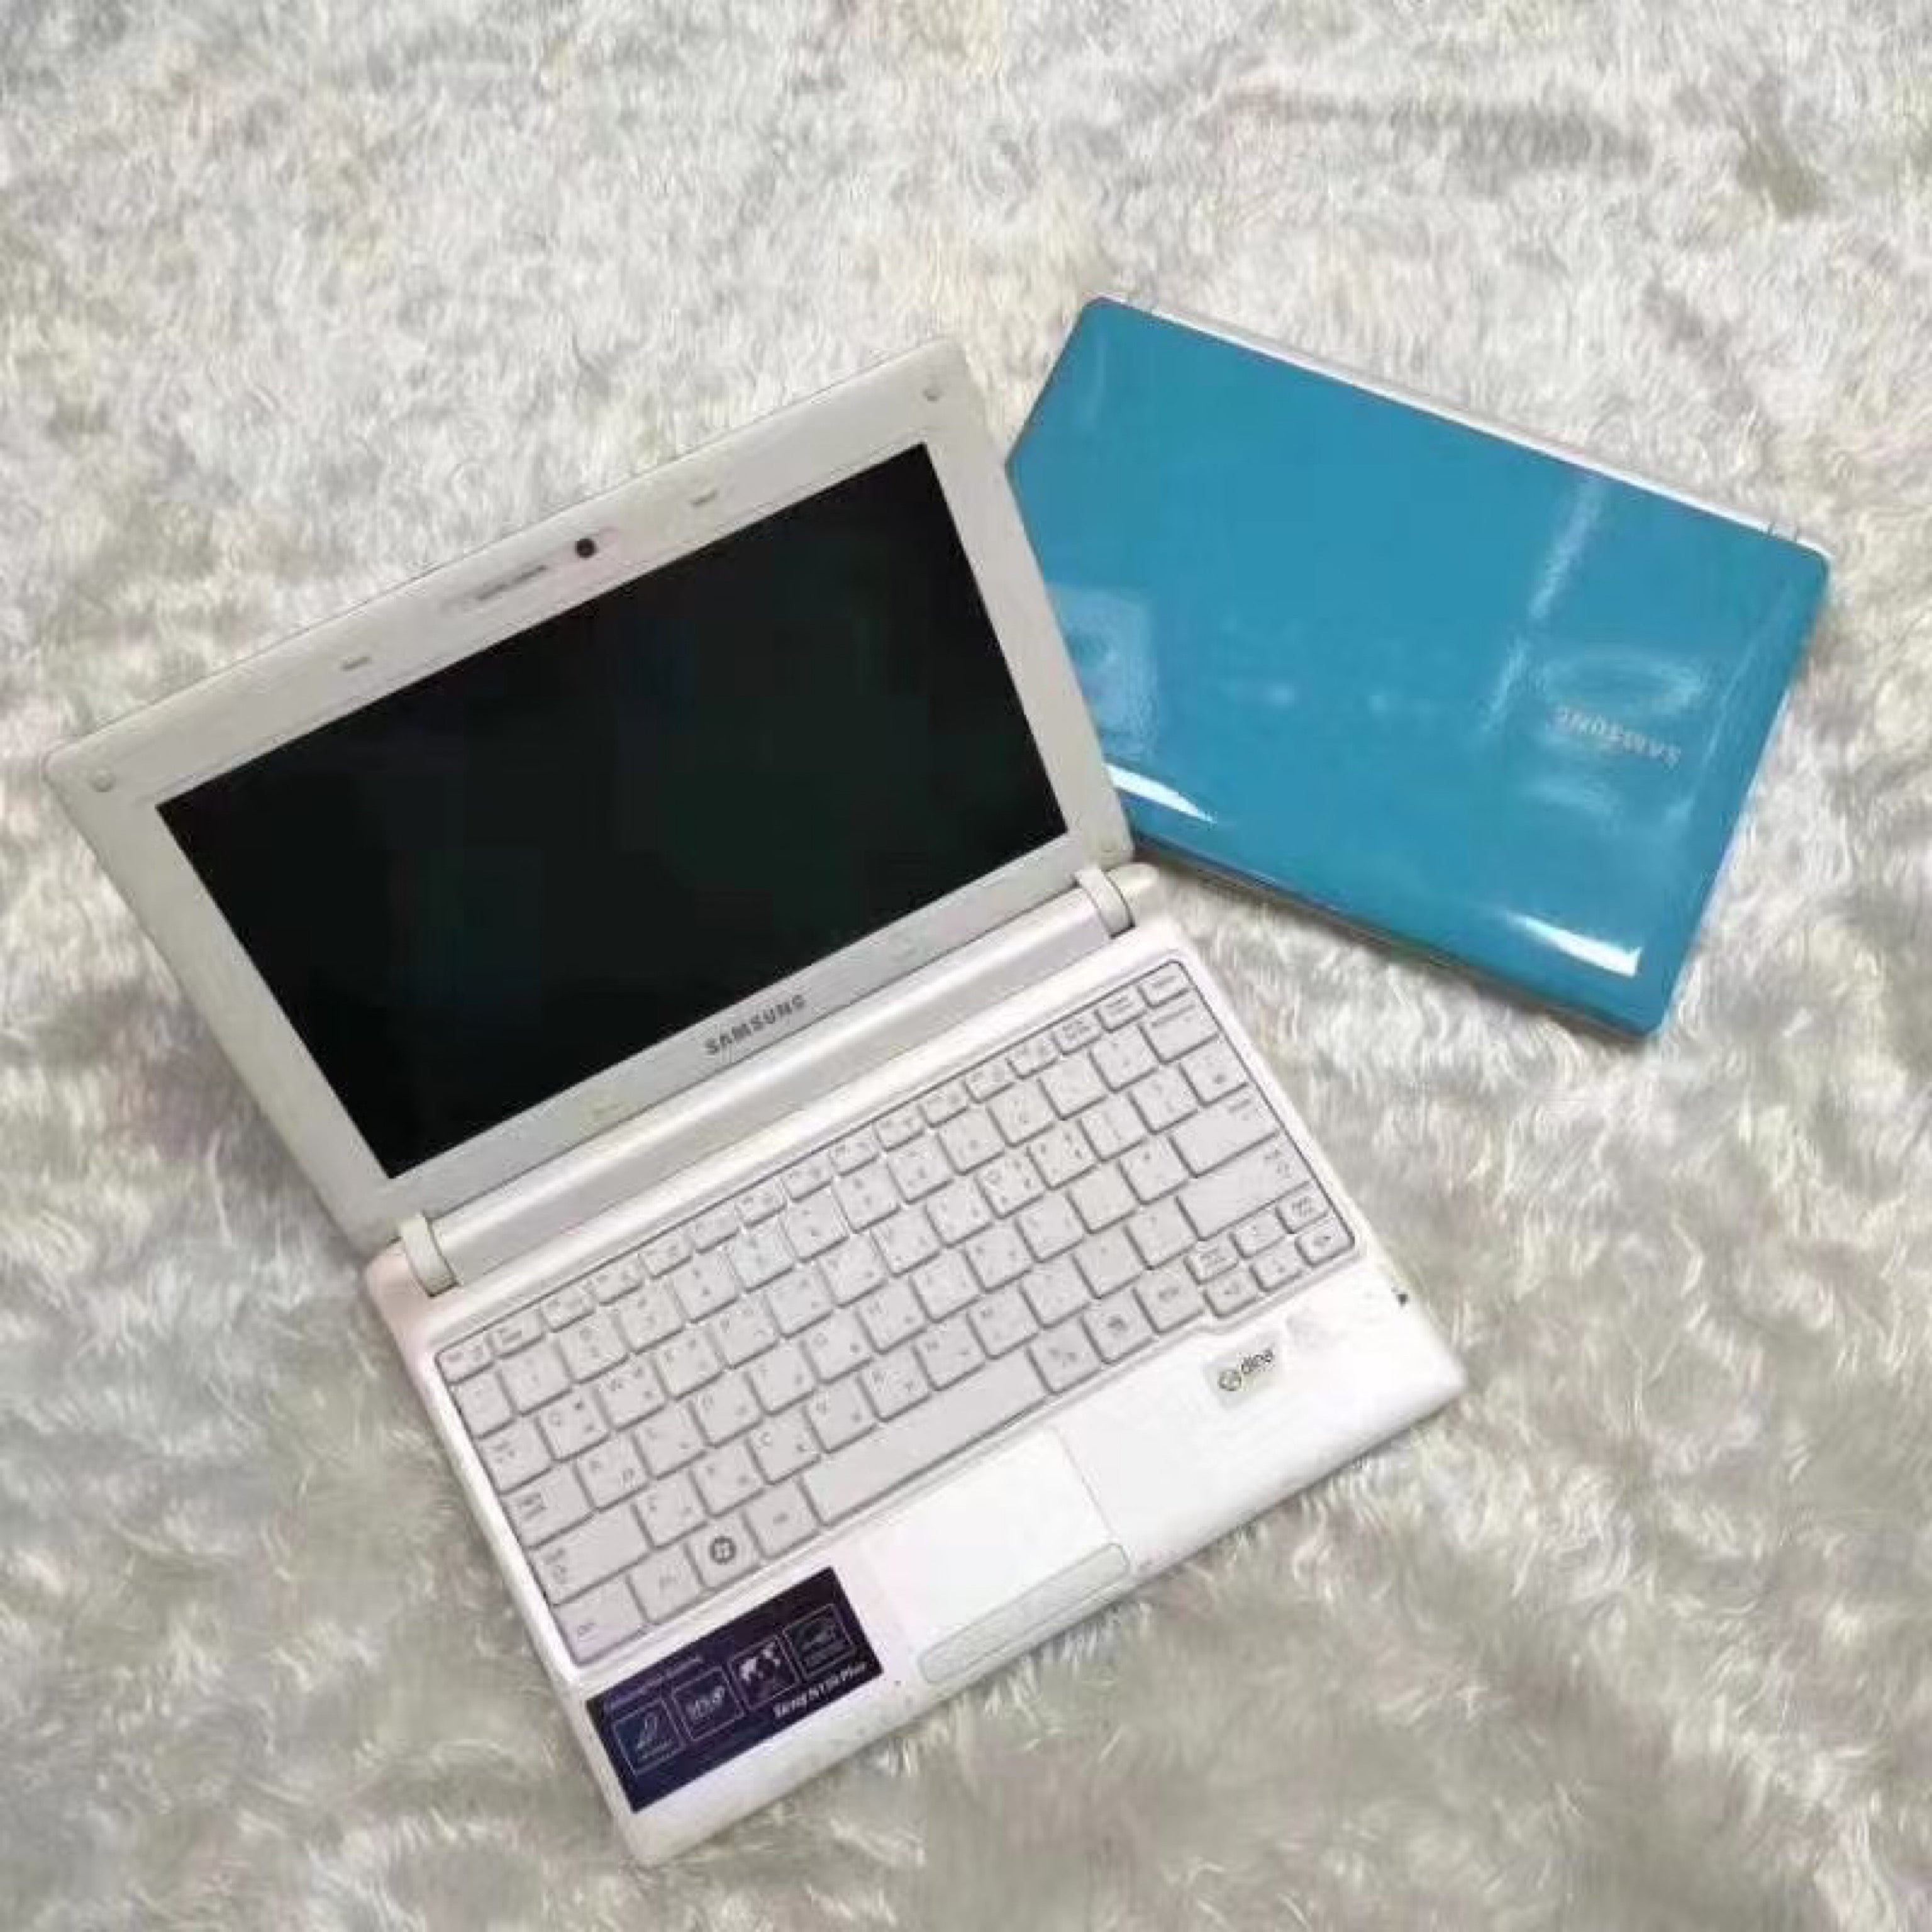 Samsung Mini Laptop Mahalila Shopping Mall